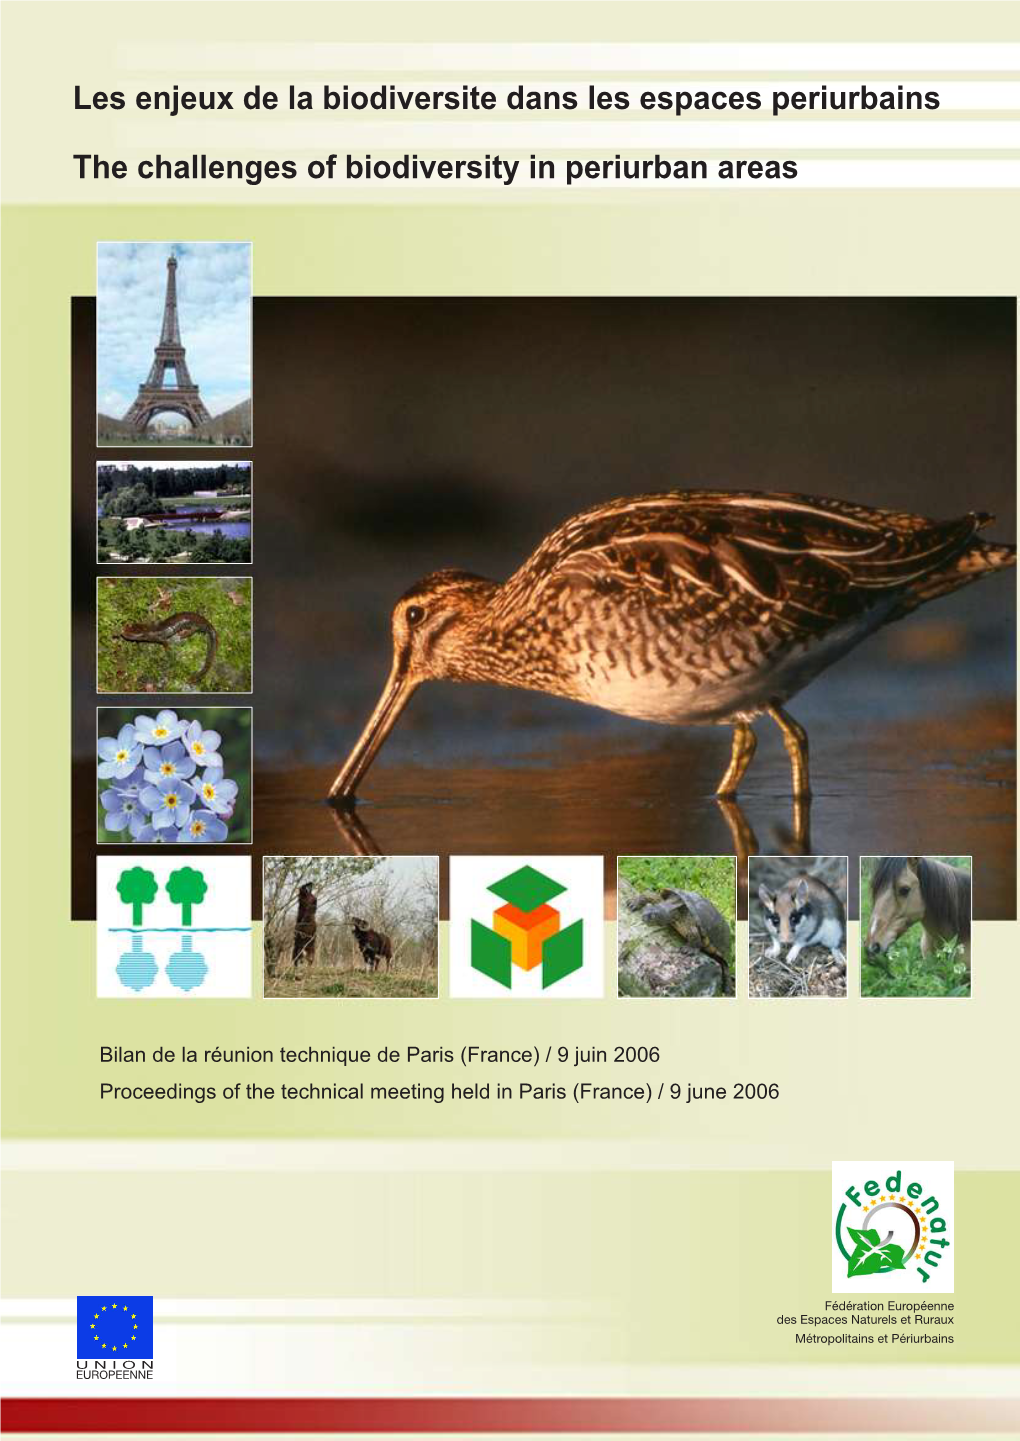 Biodiversity Challenges in Periurban Parks